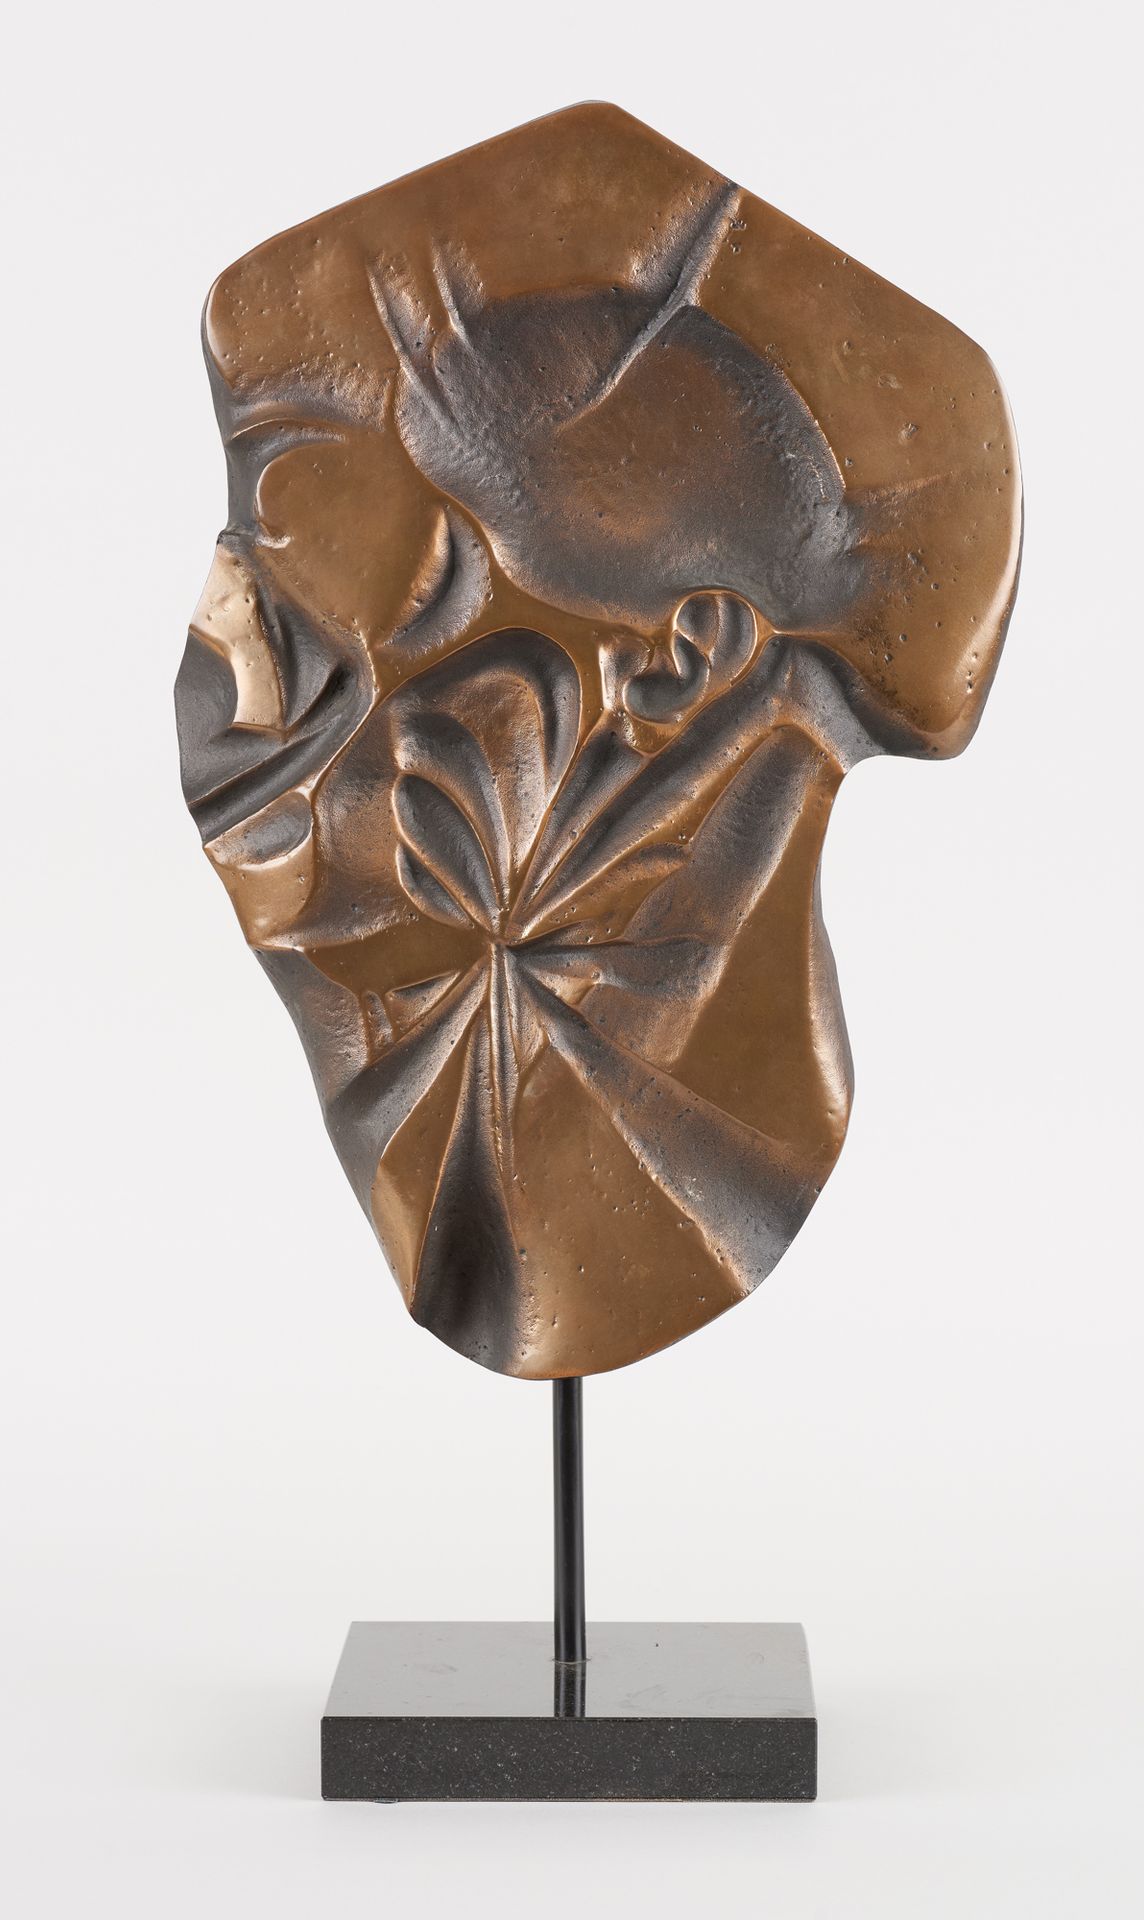 Marc LAFFINEUR École belge (1940) 青铜雕塑：简介。

签名和日期：M. Laffineur 80，印刷品证明2/4。

尺寸：&hellip;